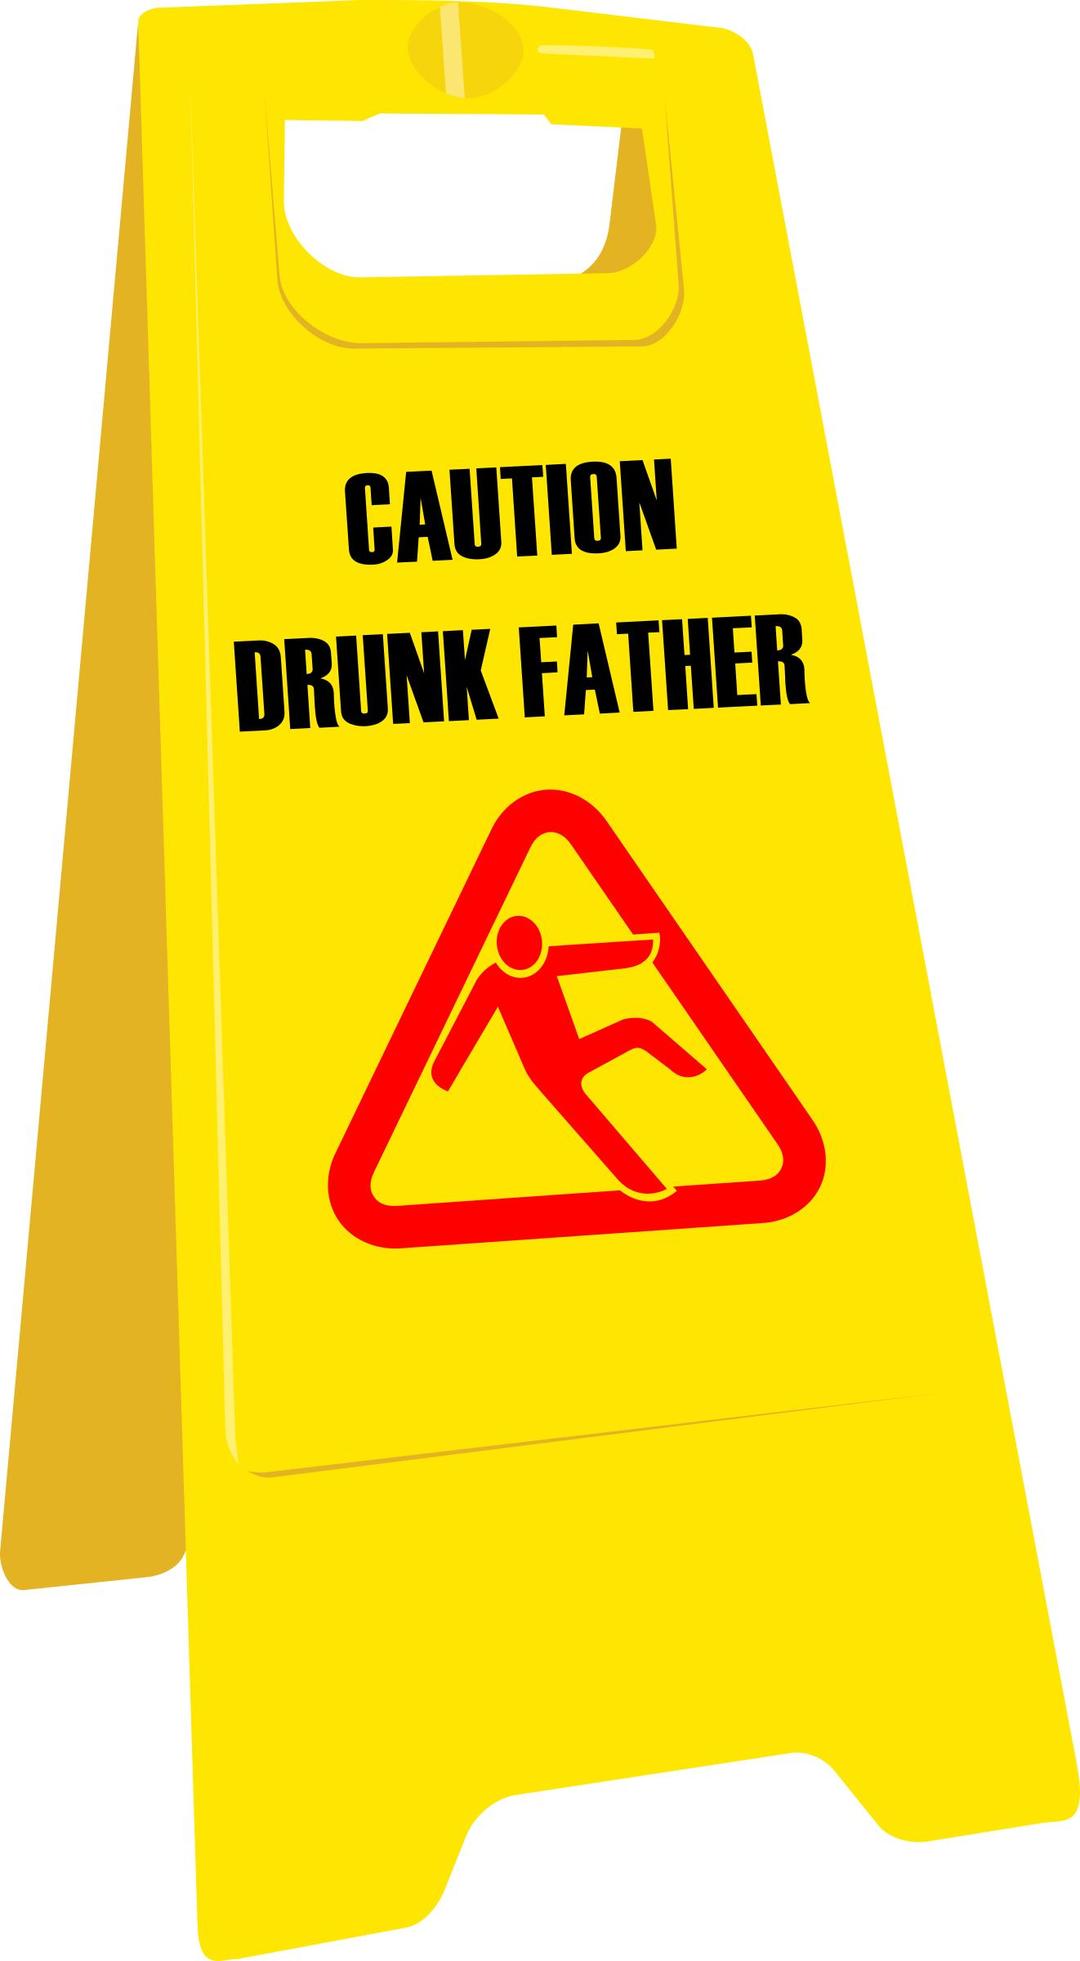 Drunk father sign png transparent